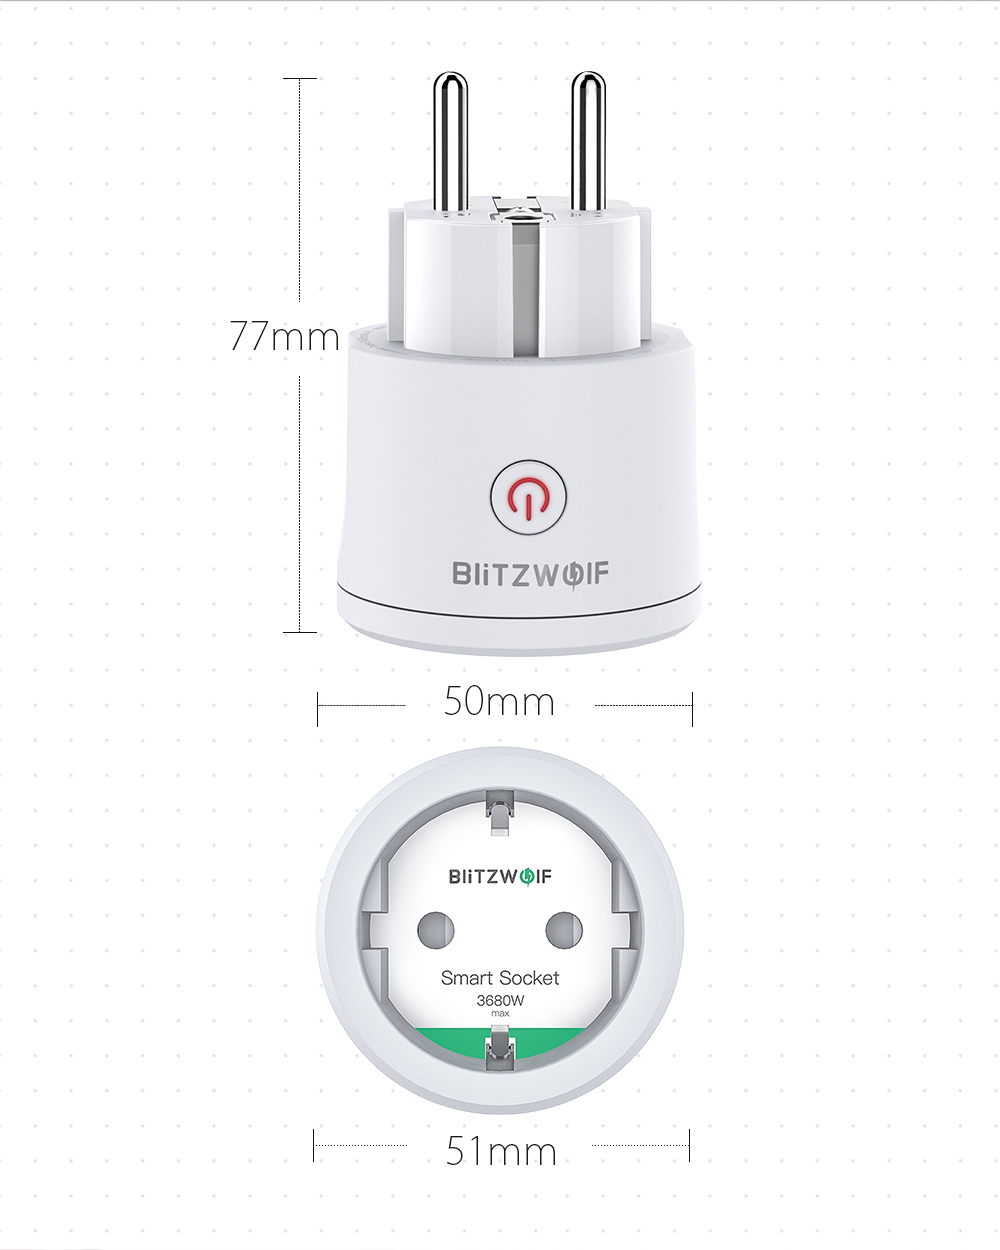 Blitzwolf BW-SHP10 smart socket